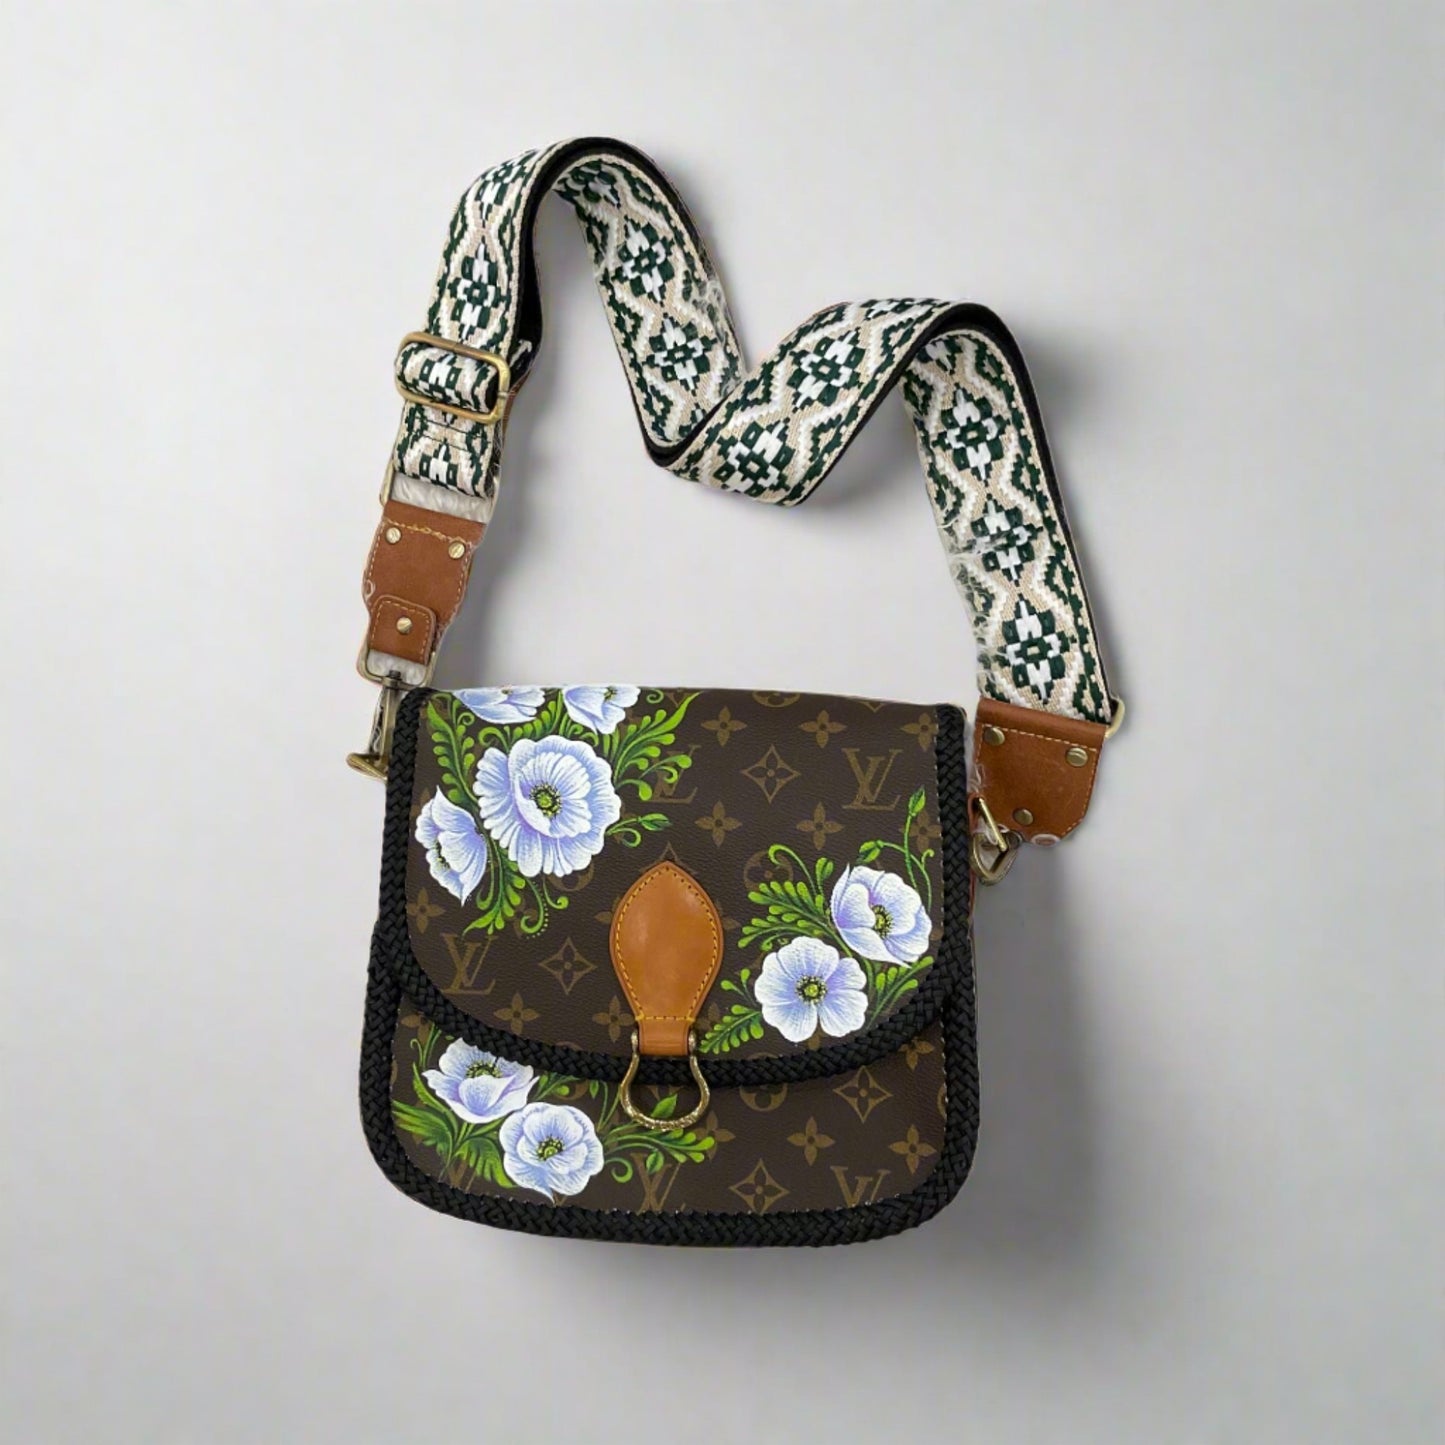 Prim & Poppy by New Vintage Handbags